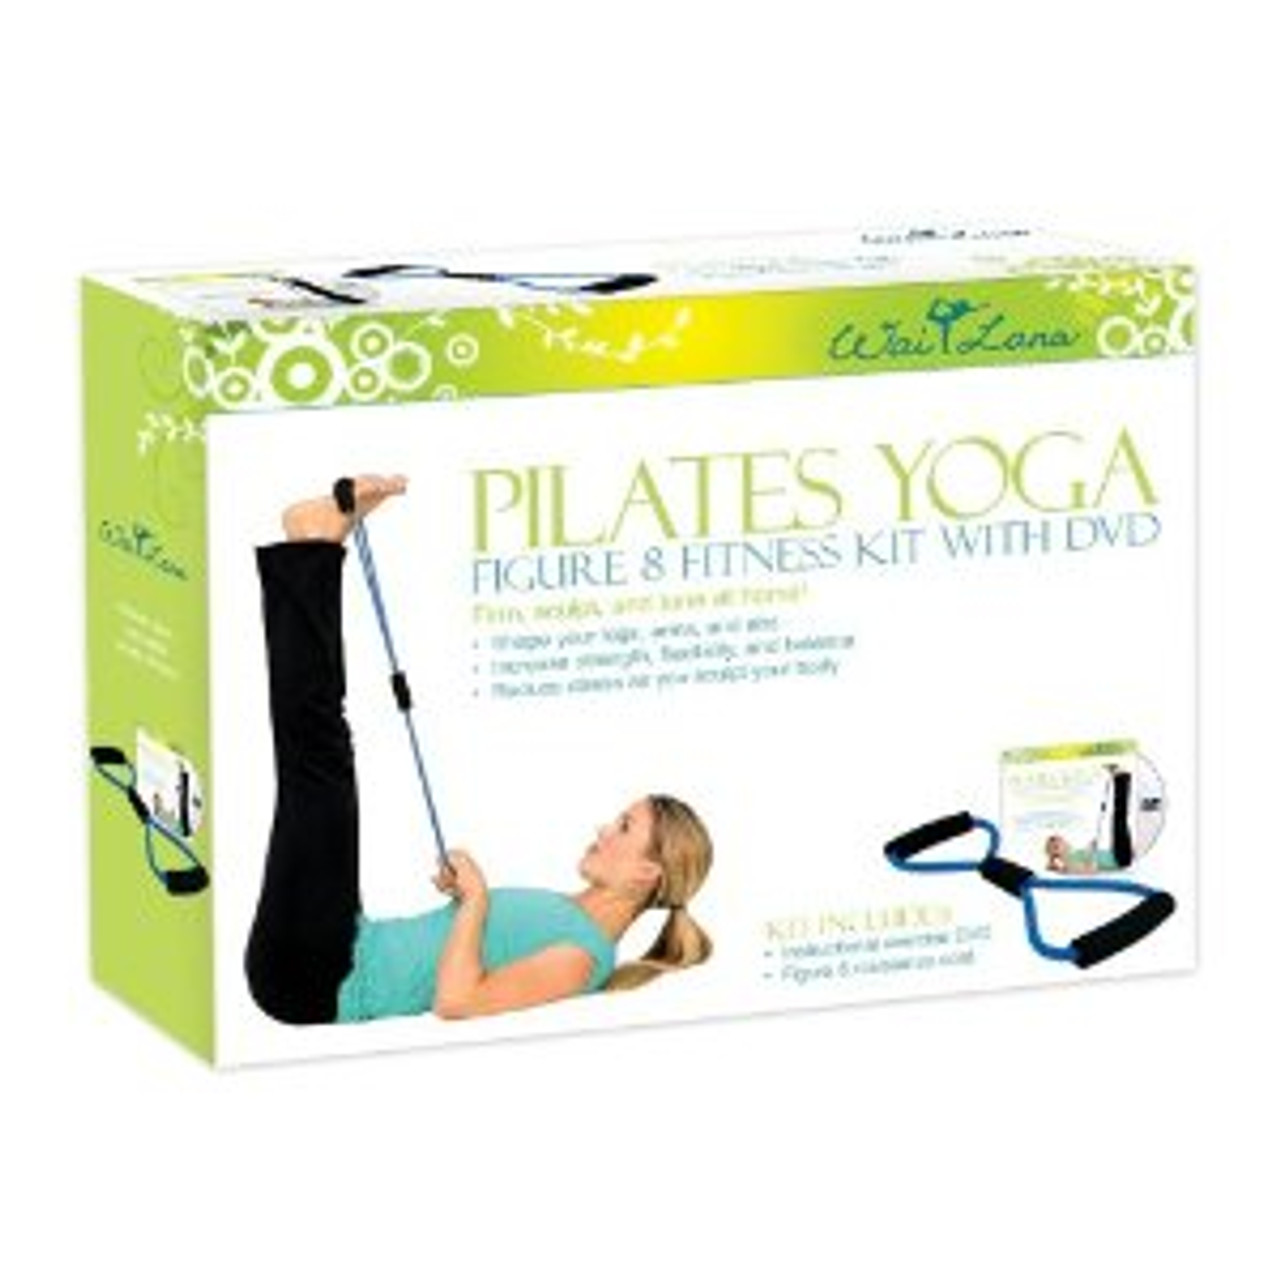 Pilates Yoga Figure 8 Kit - Wai Lana